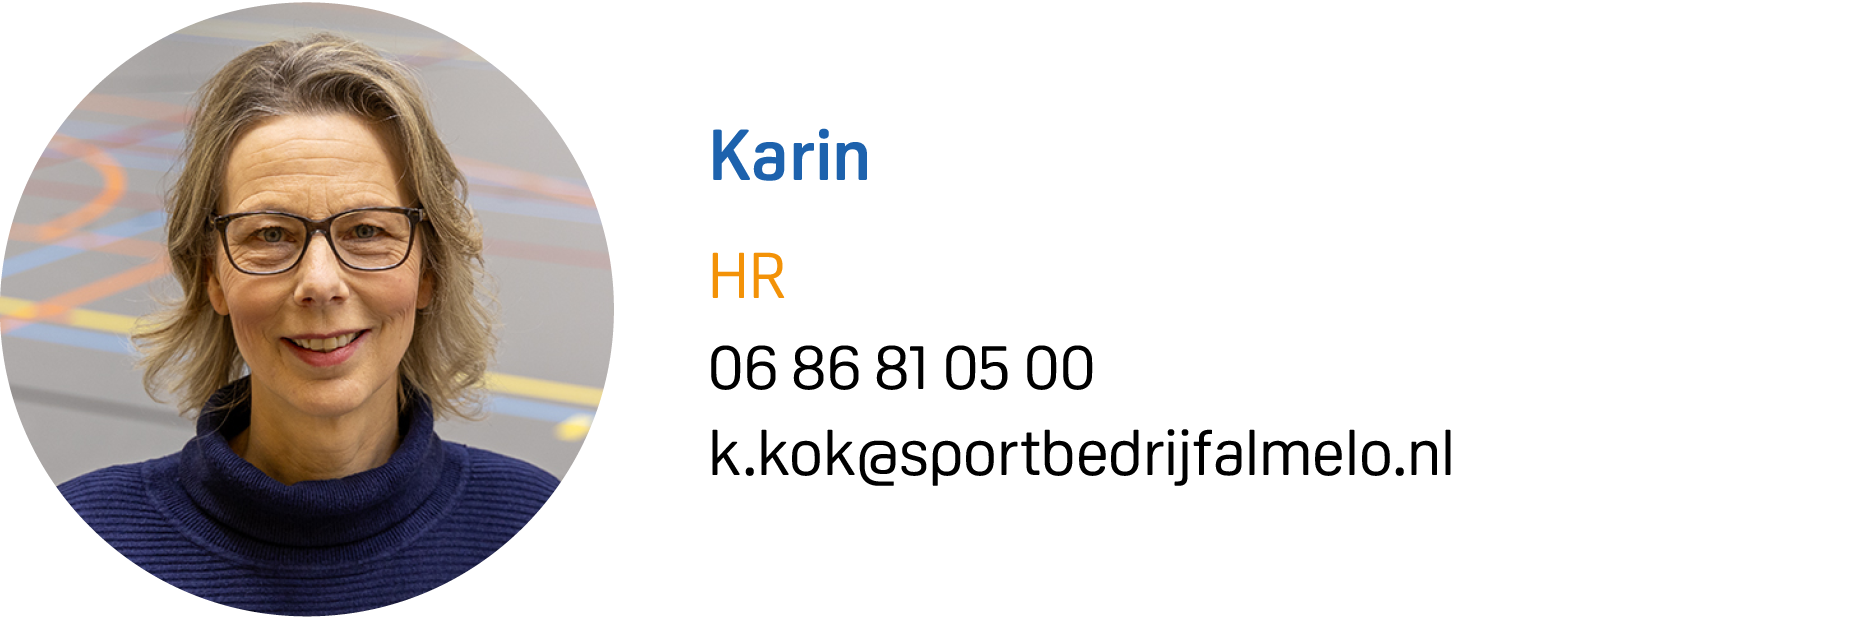 Karin Visite 2.0.png